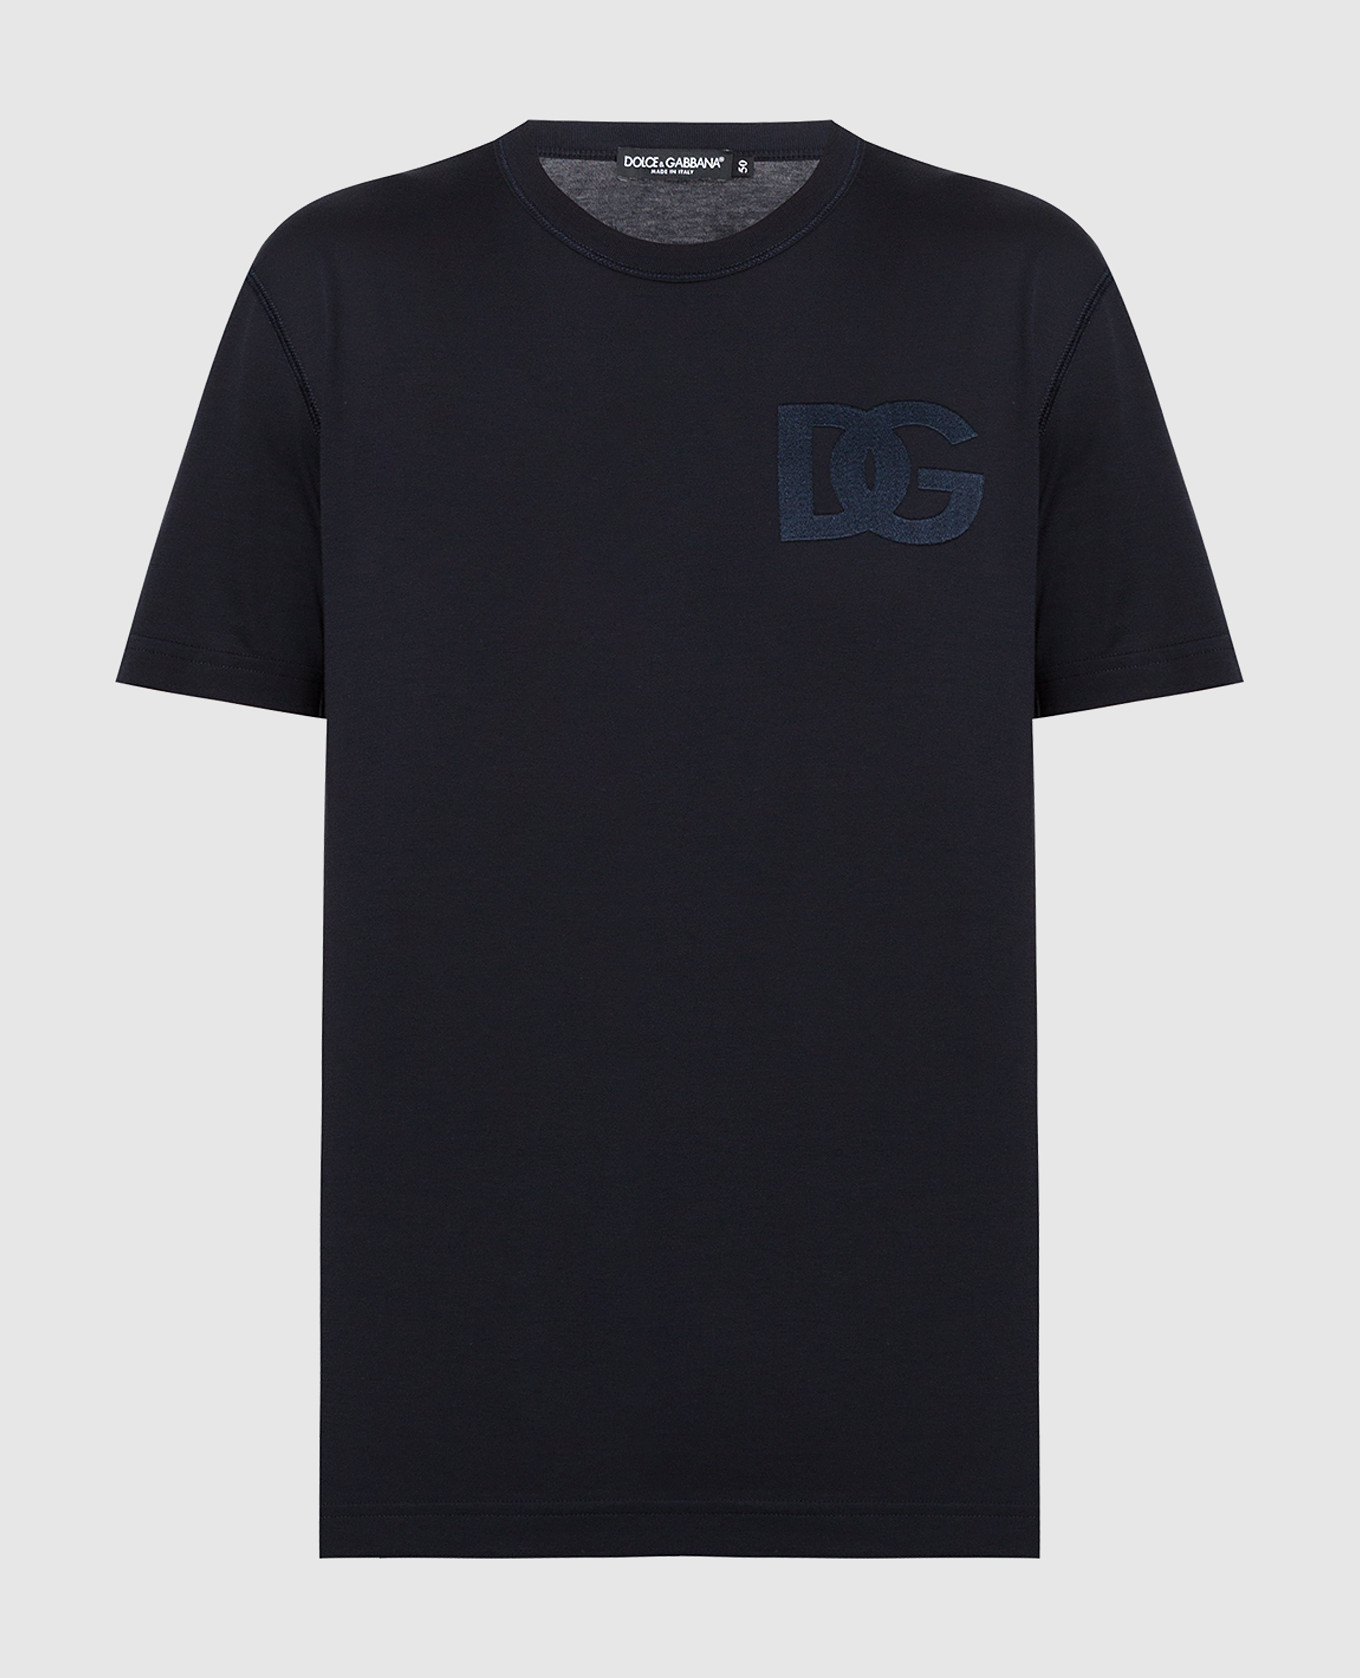 Темно-синяя футболка с вышивкой логотипа DG